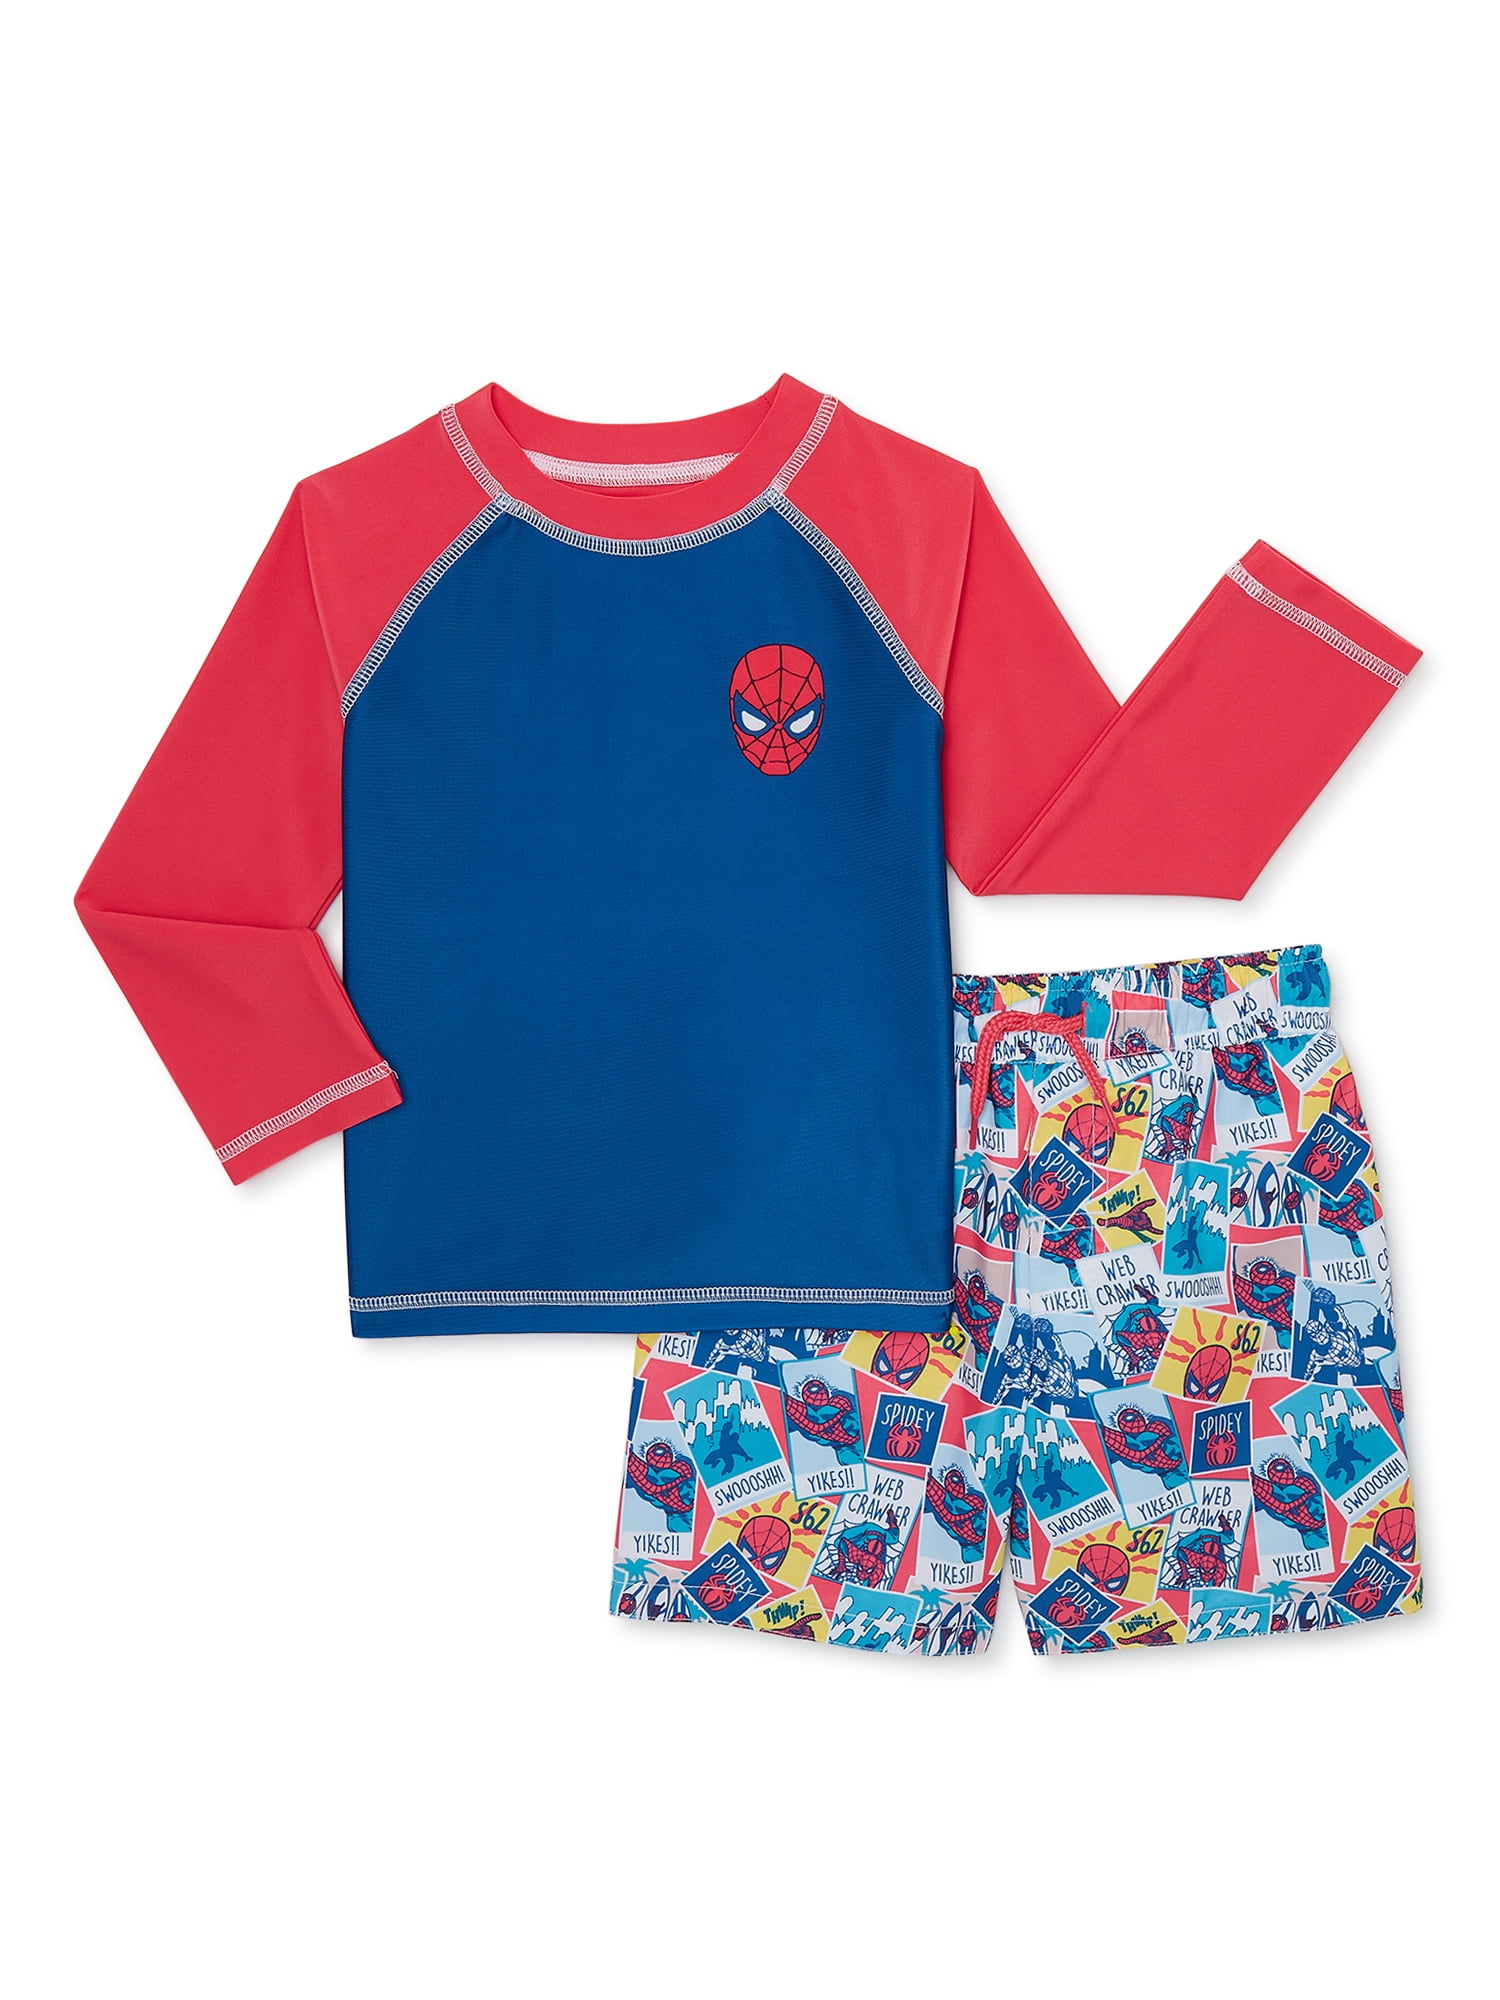 Spider-Man Toddler Boy Long Sleeve Rashguard and Swim Trunks Set, 2-Piece, Sizes 2T-5T